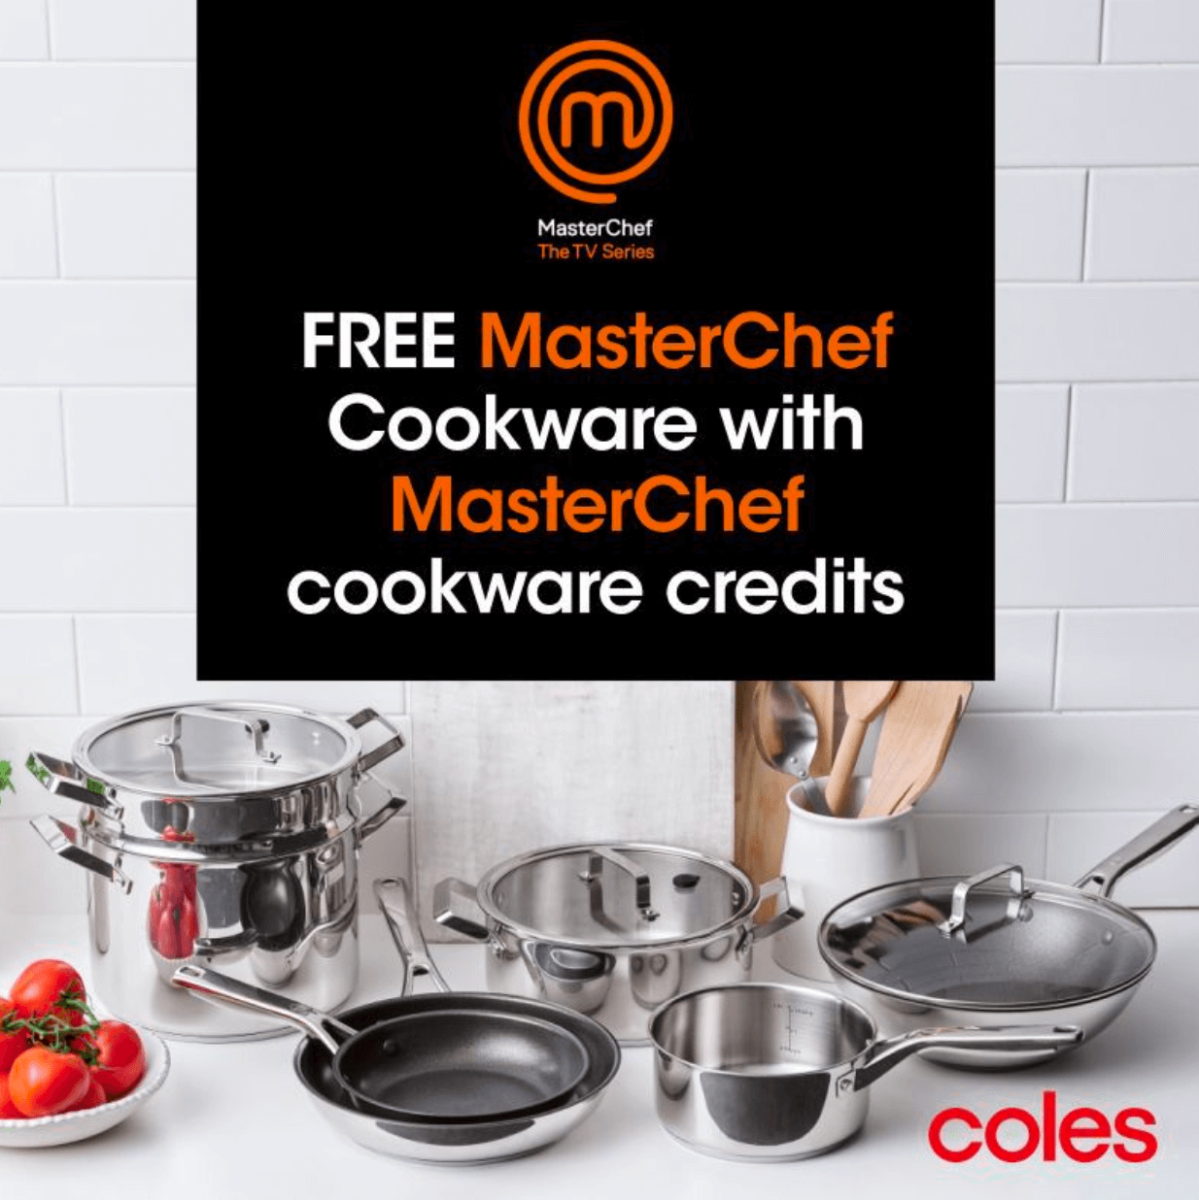 Coles drops MasterChef cookware collectables